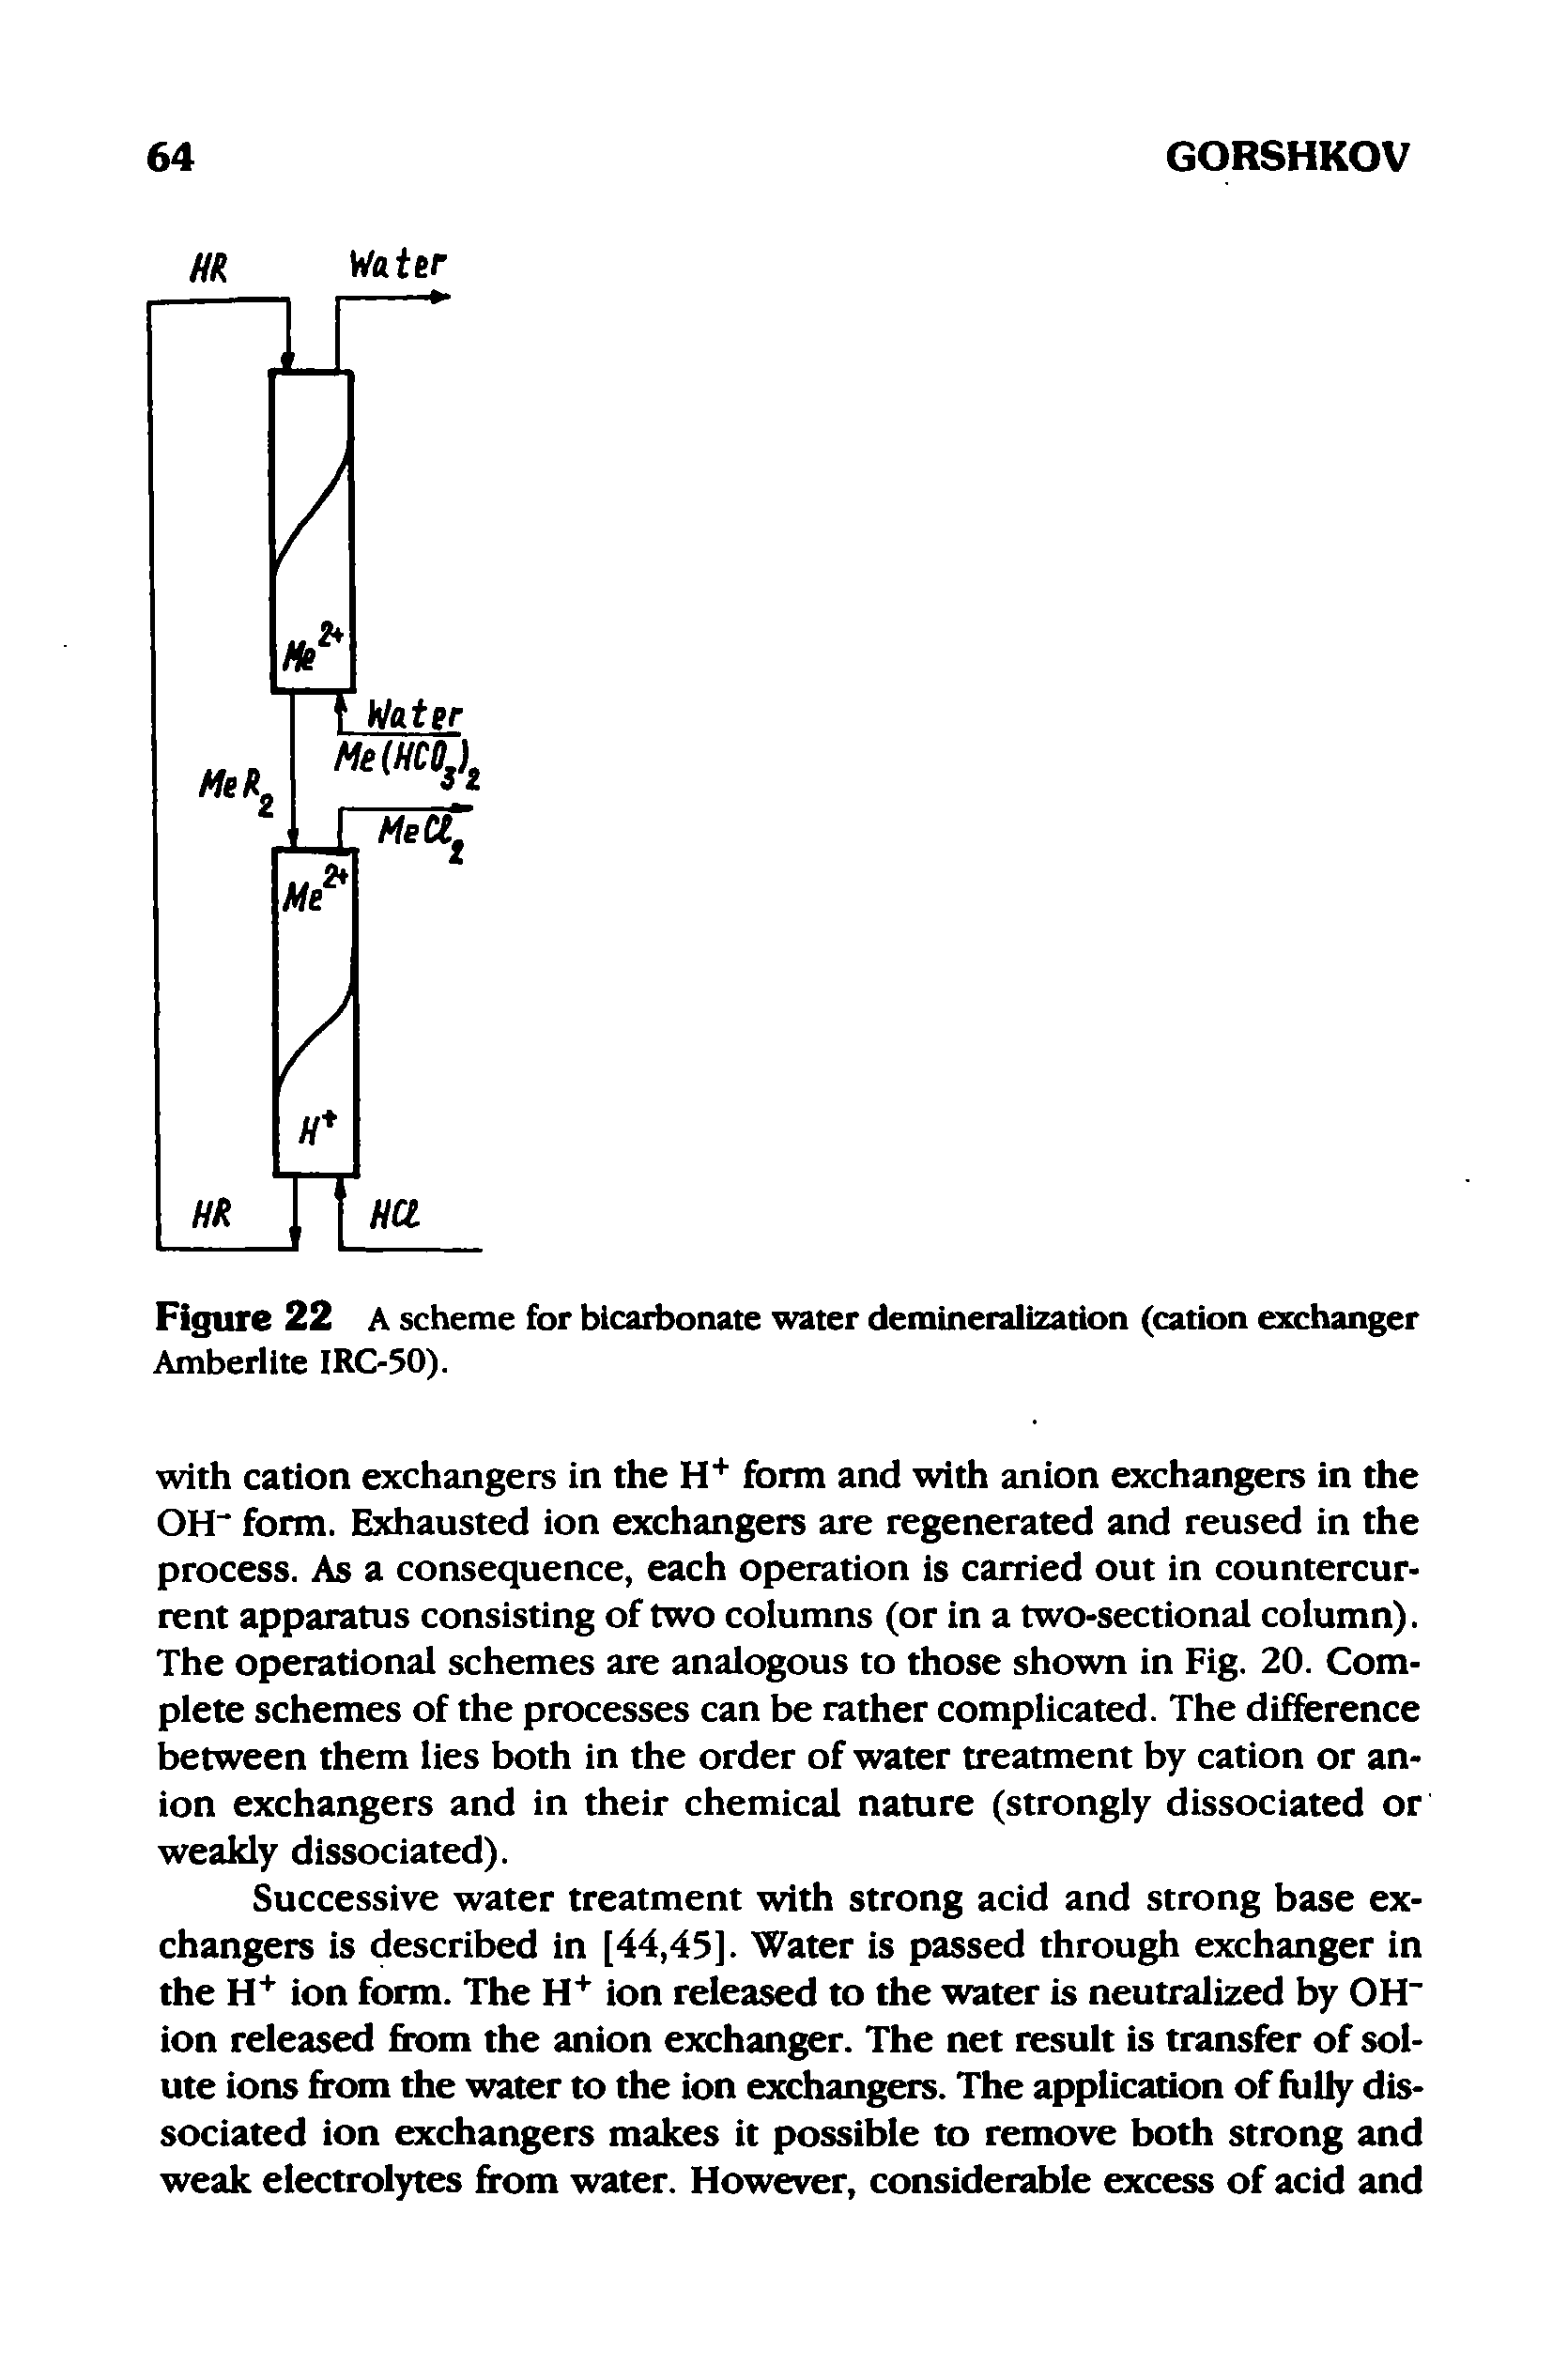 Figure 22 A scheme for bicarbonate water demineralization (cation exchanger Amberlite IRC-50).